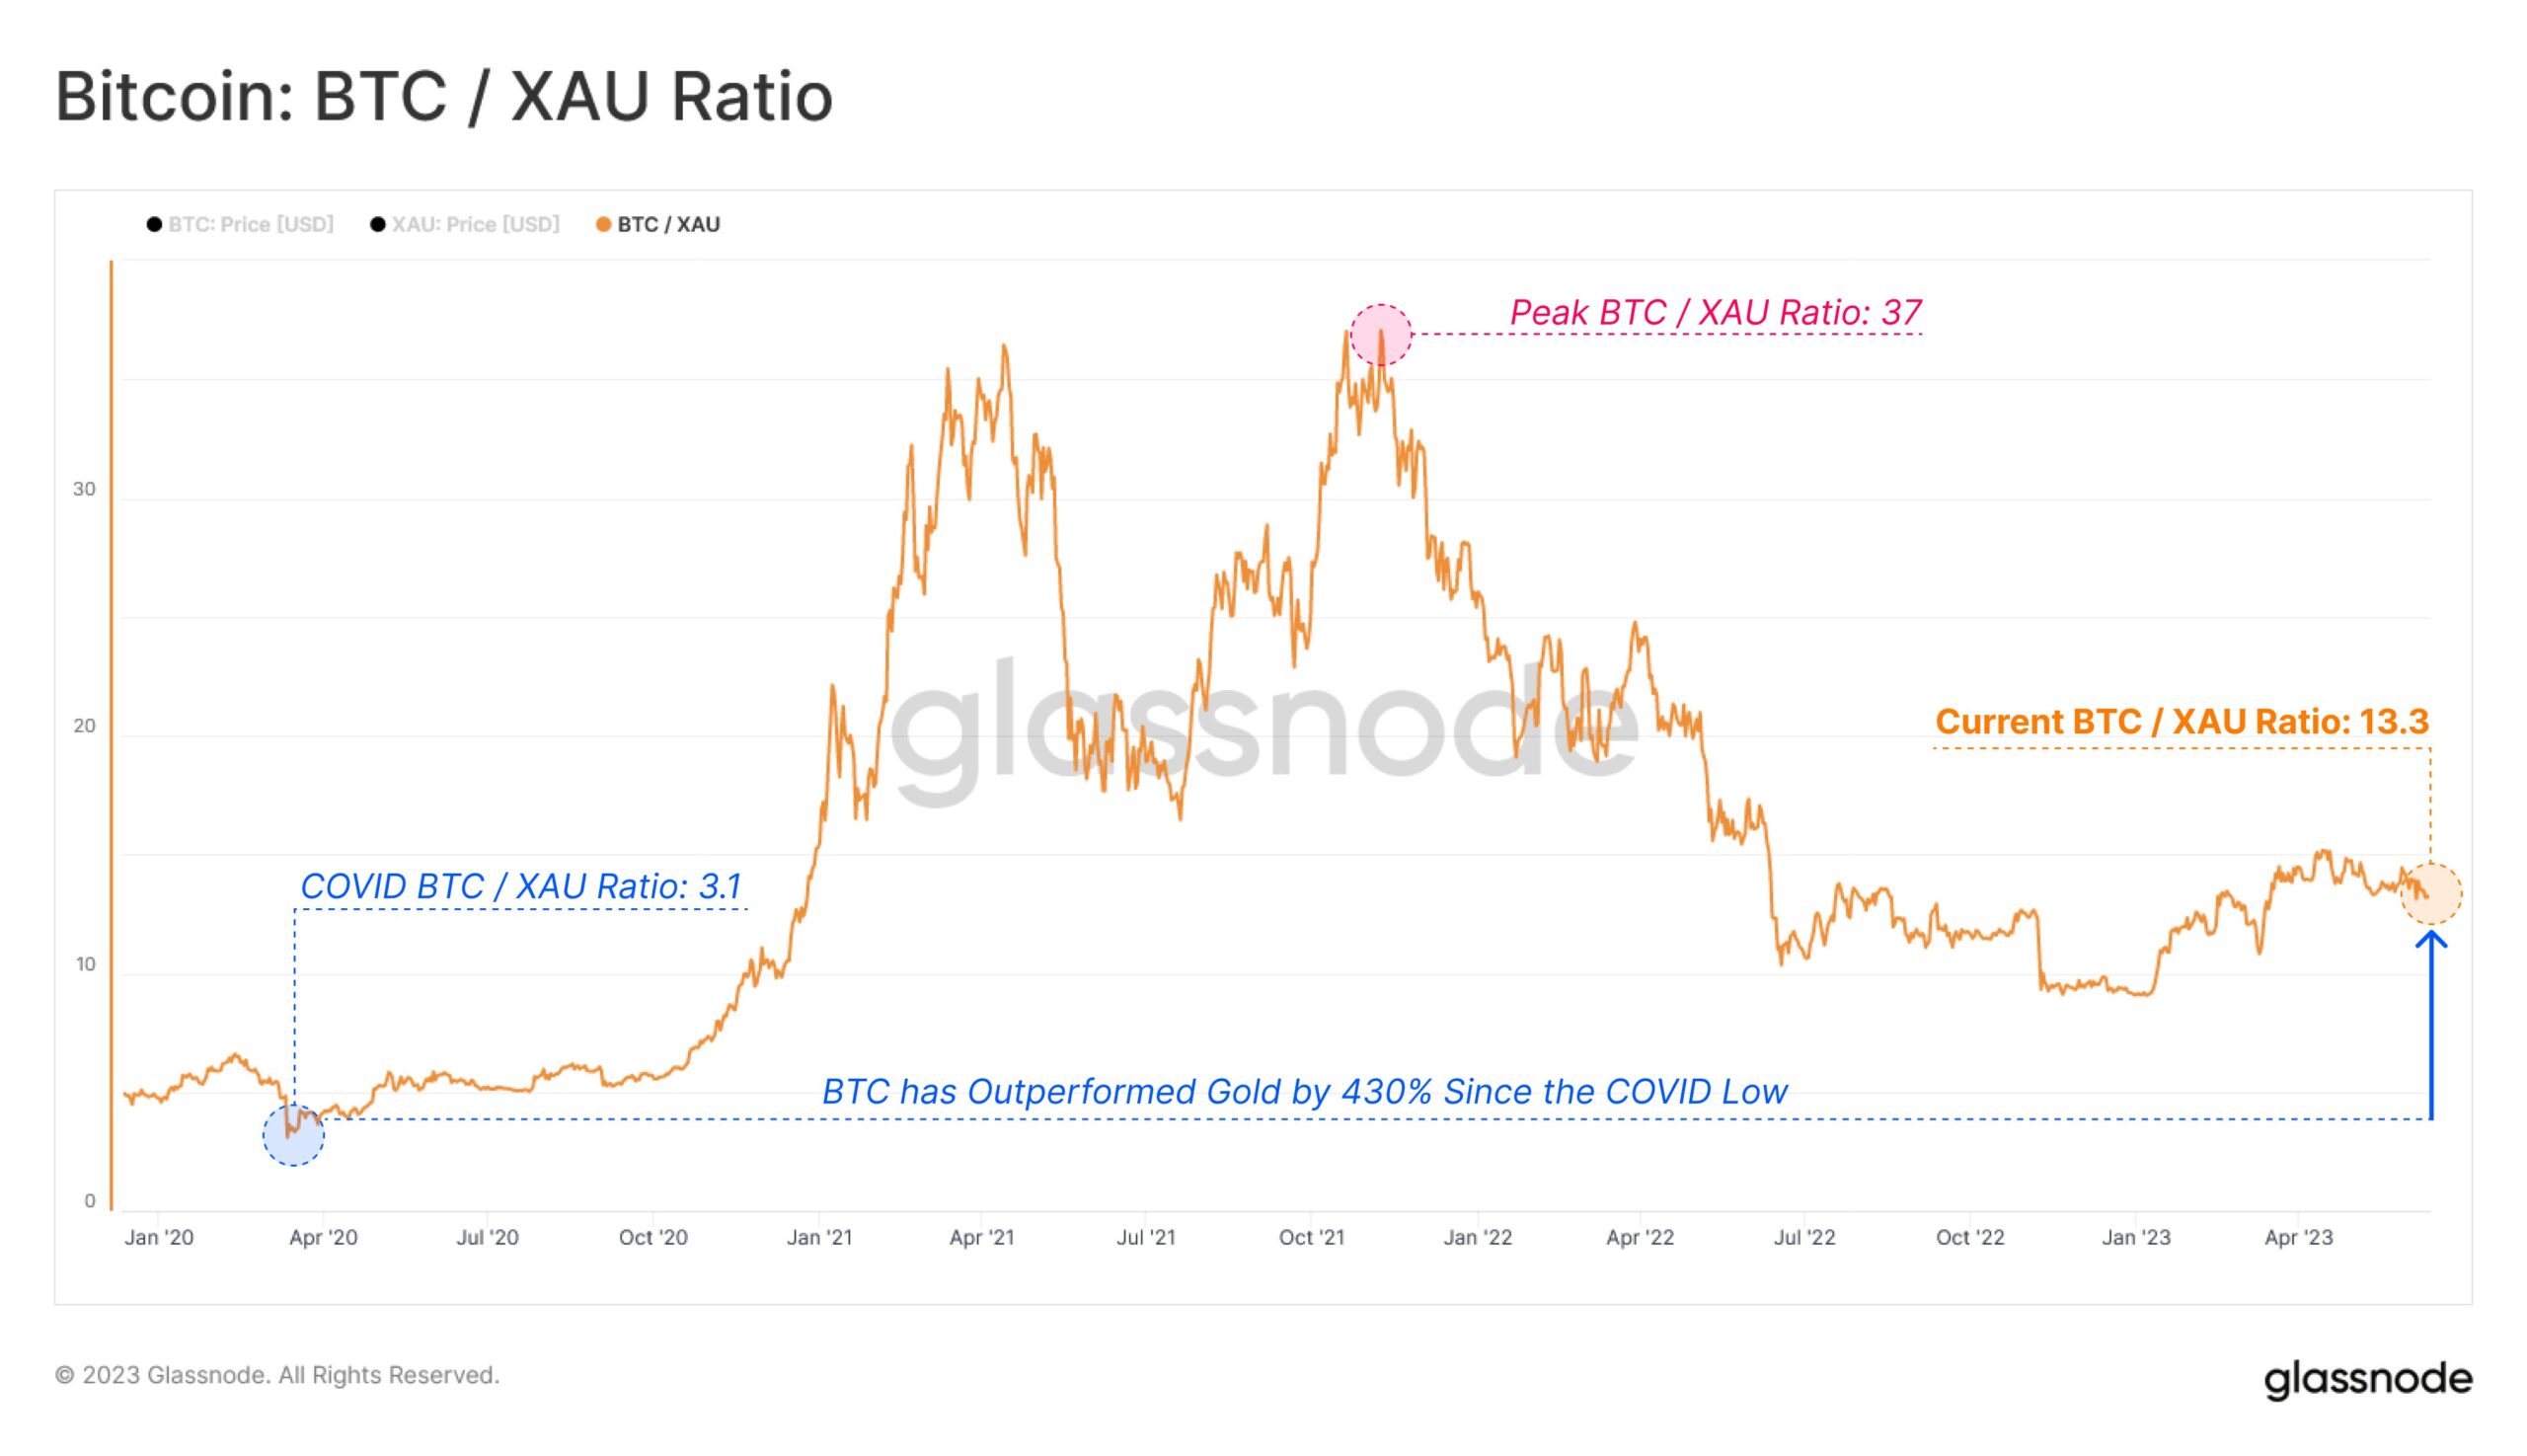  bitcoin dip low despite 3-month gold remains 